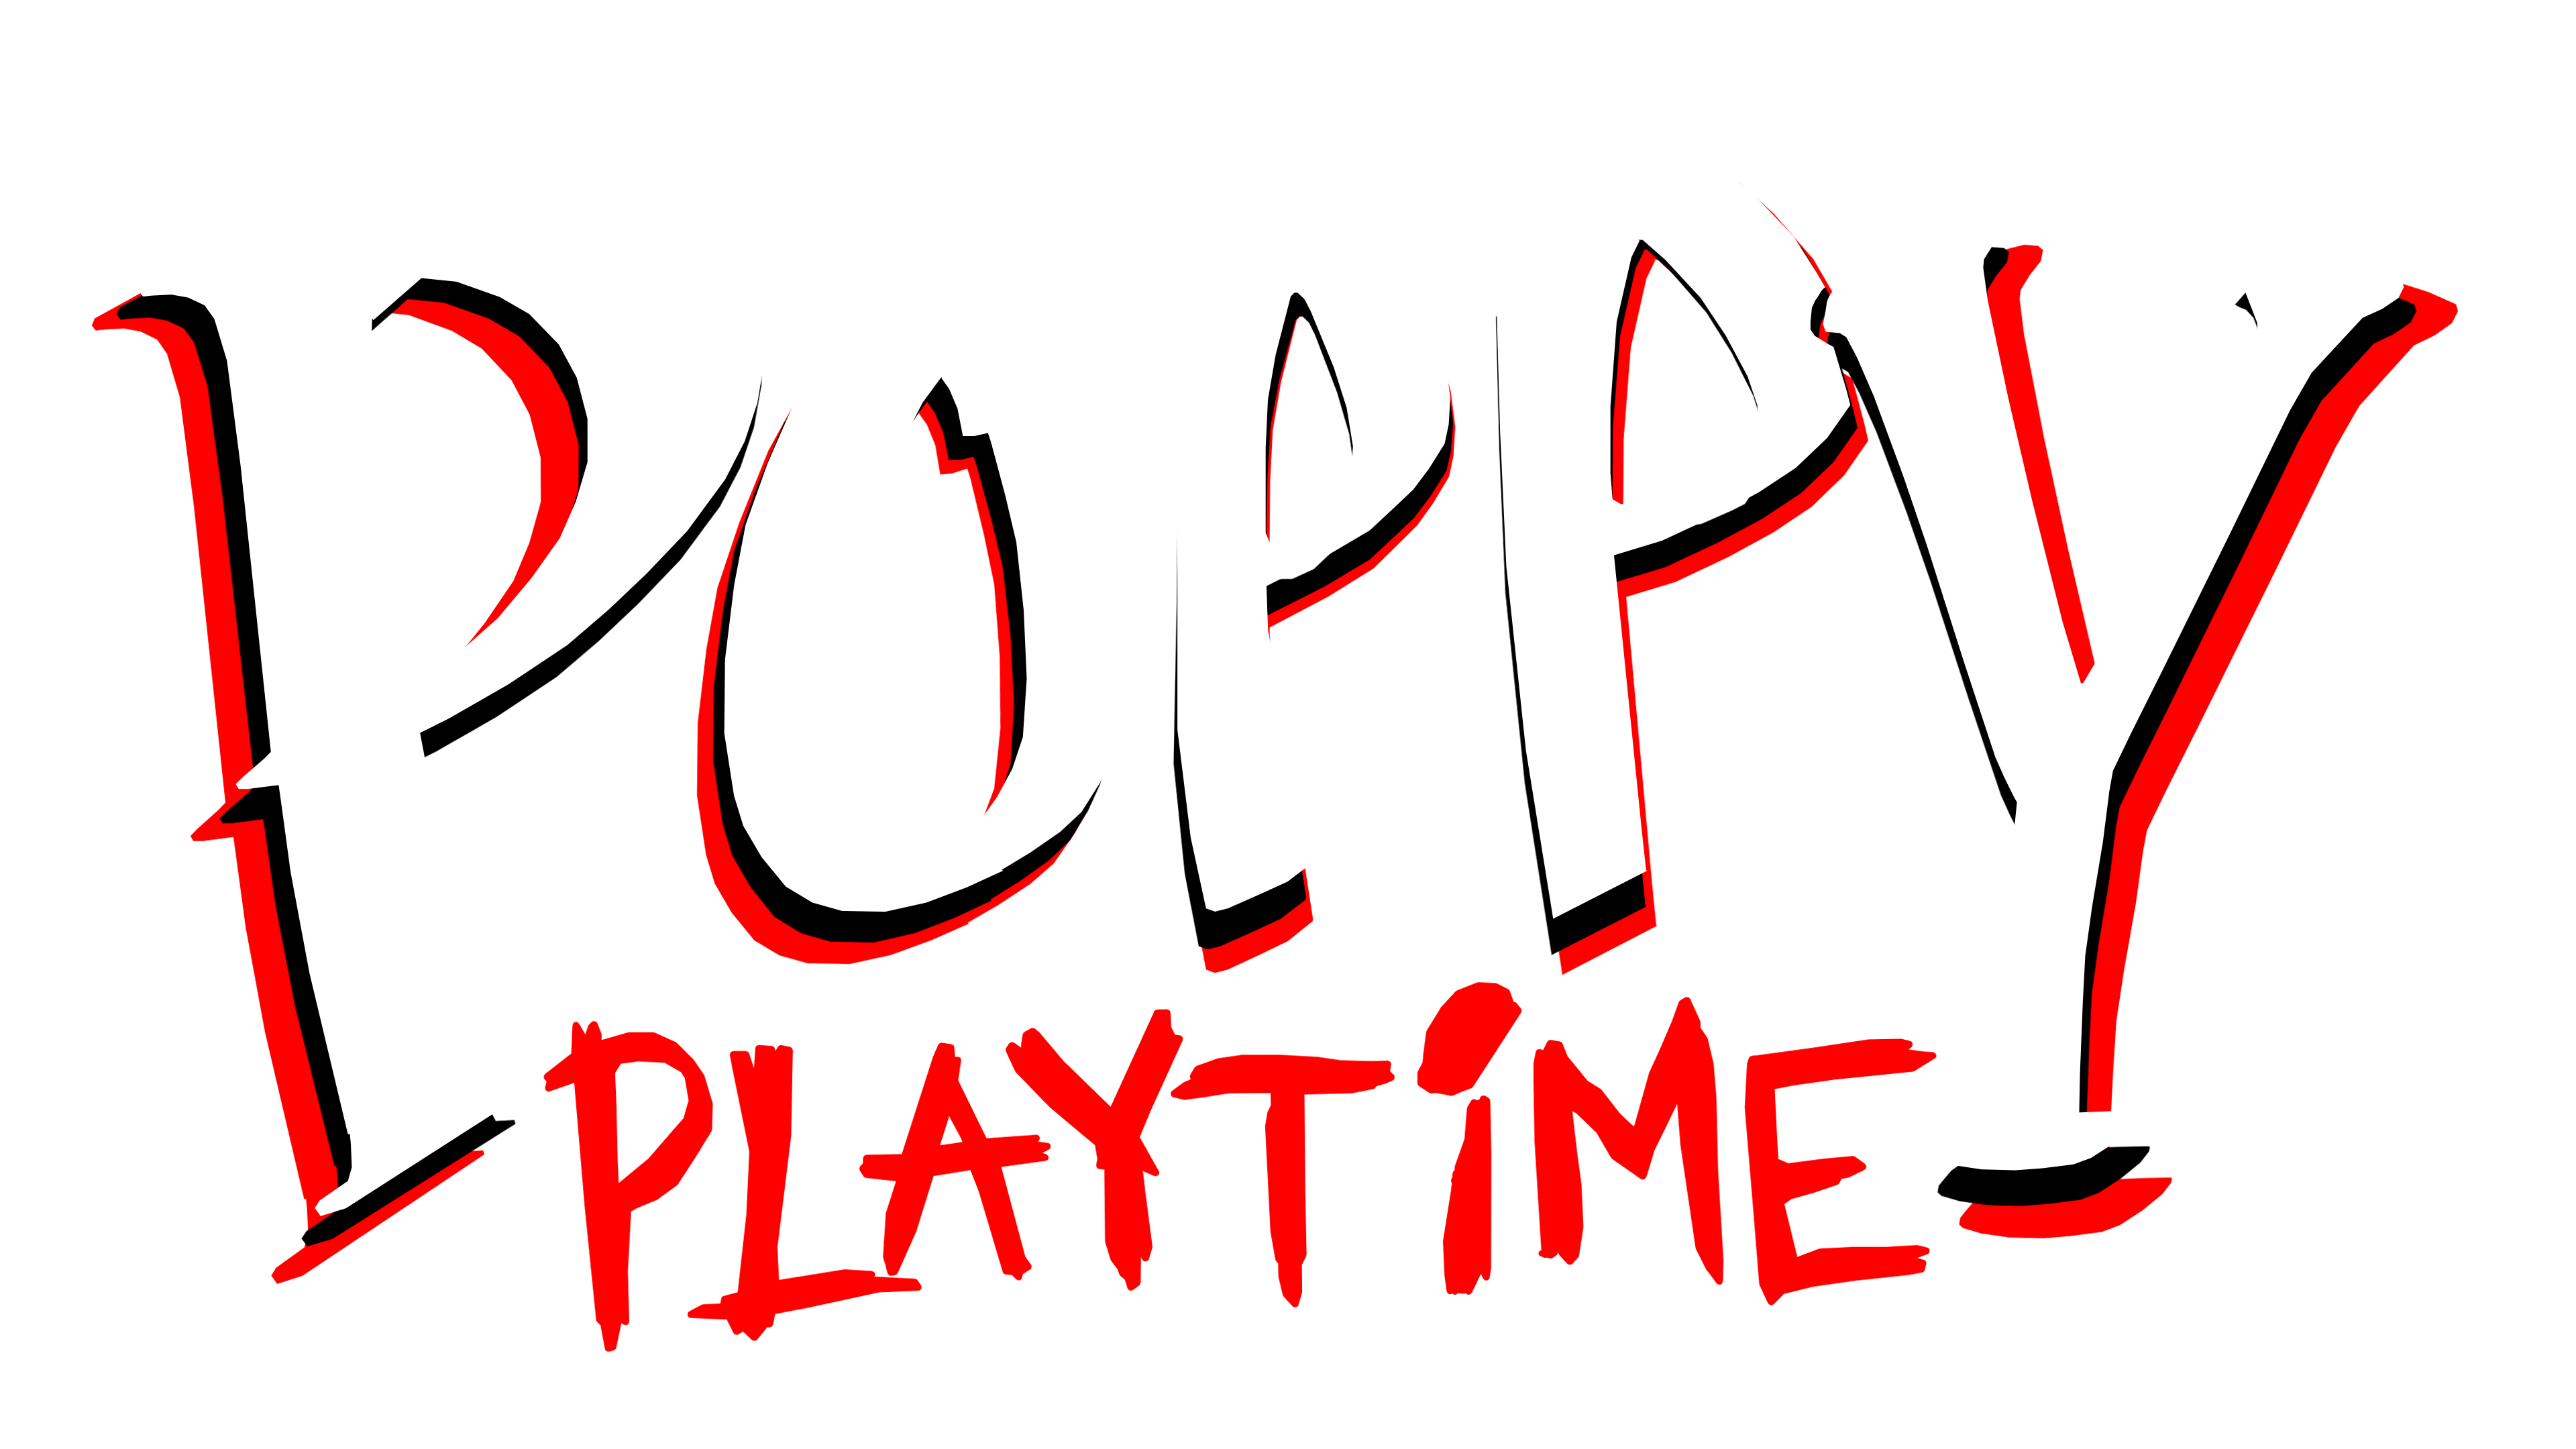 Poppy Playtime trailer teases new villain and Winter release for